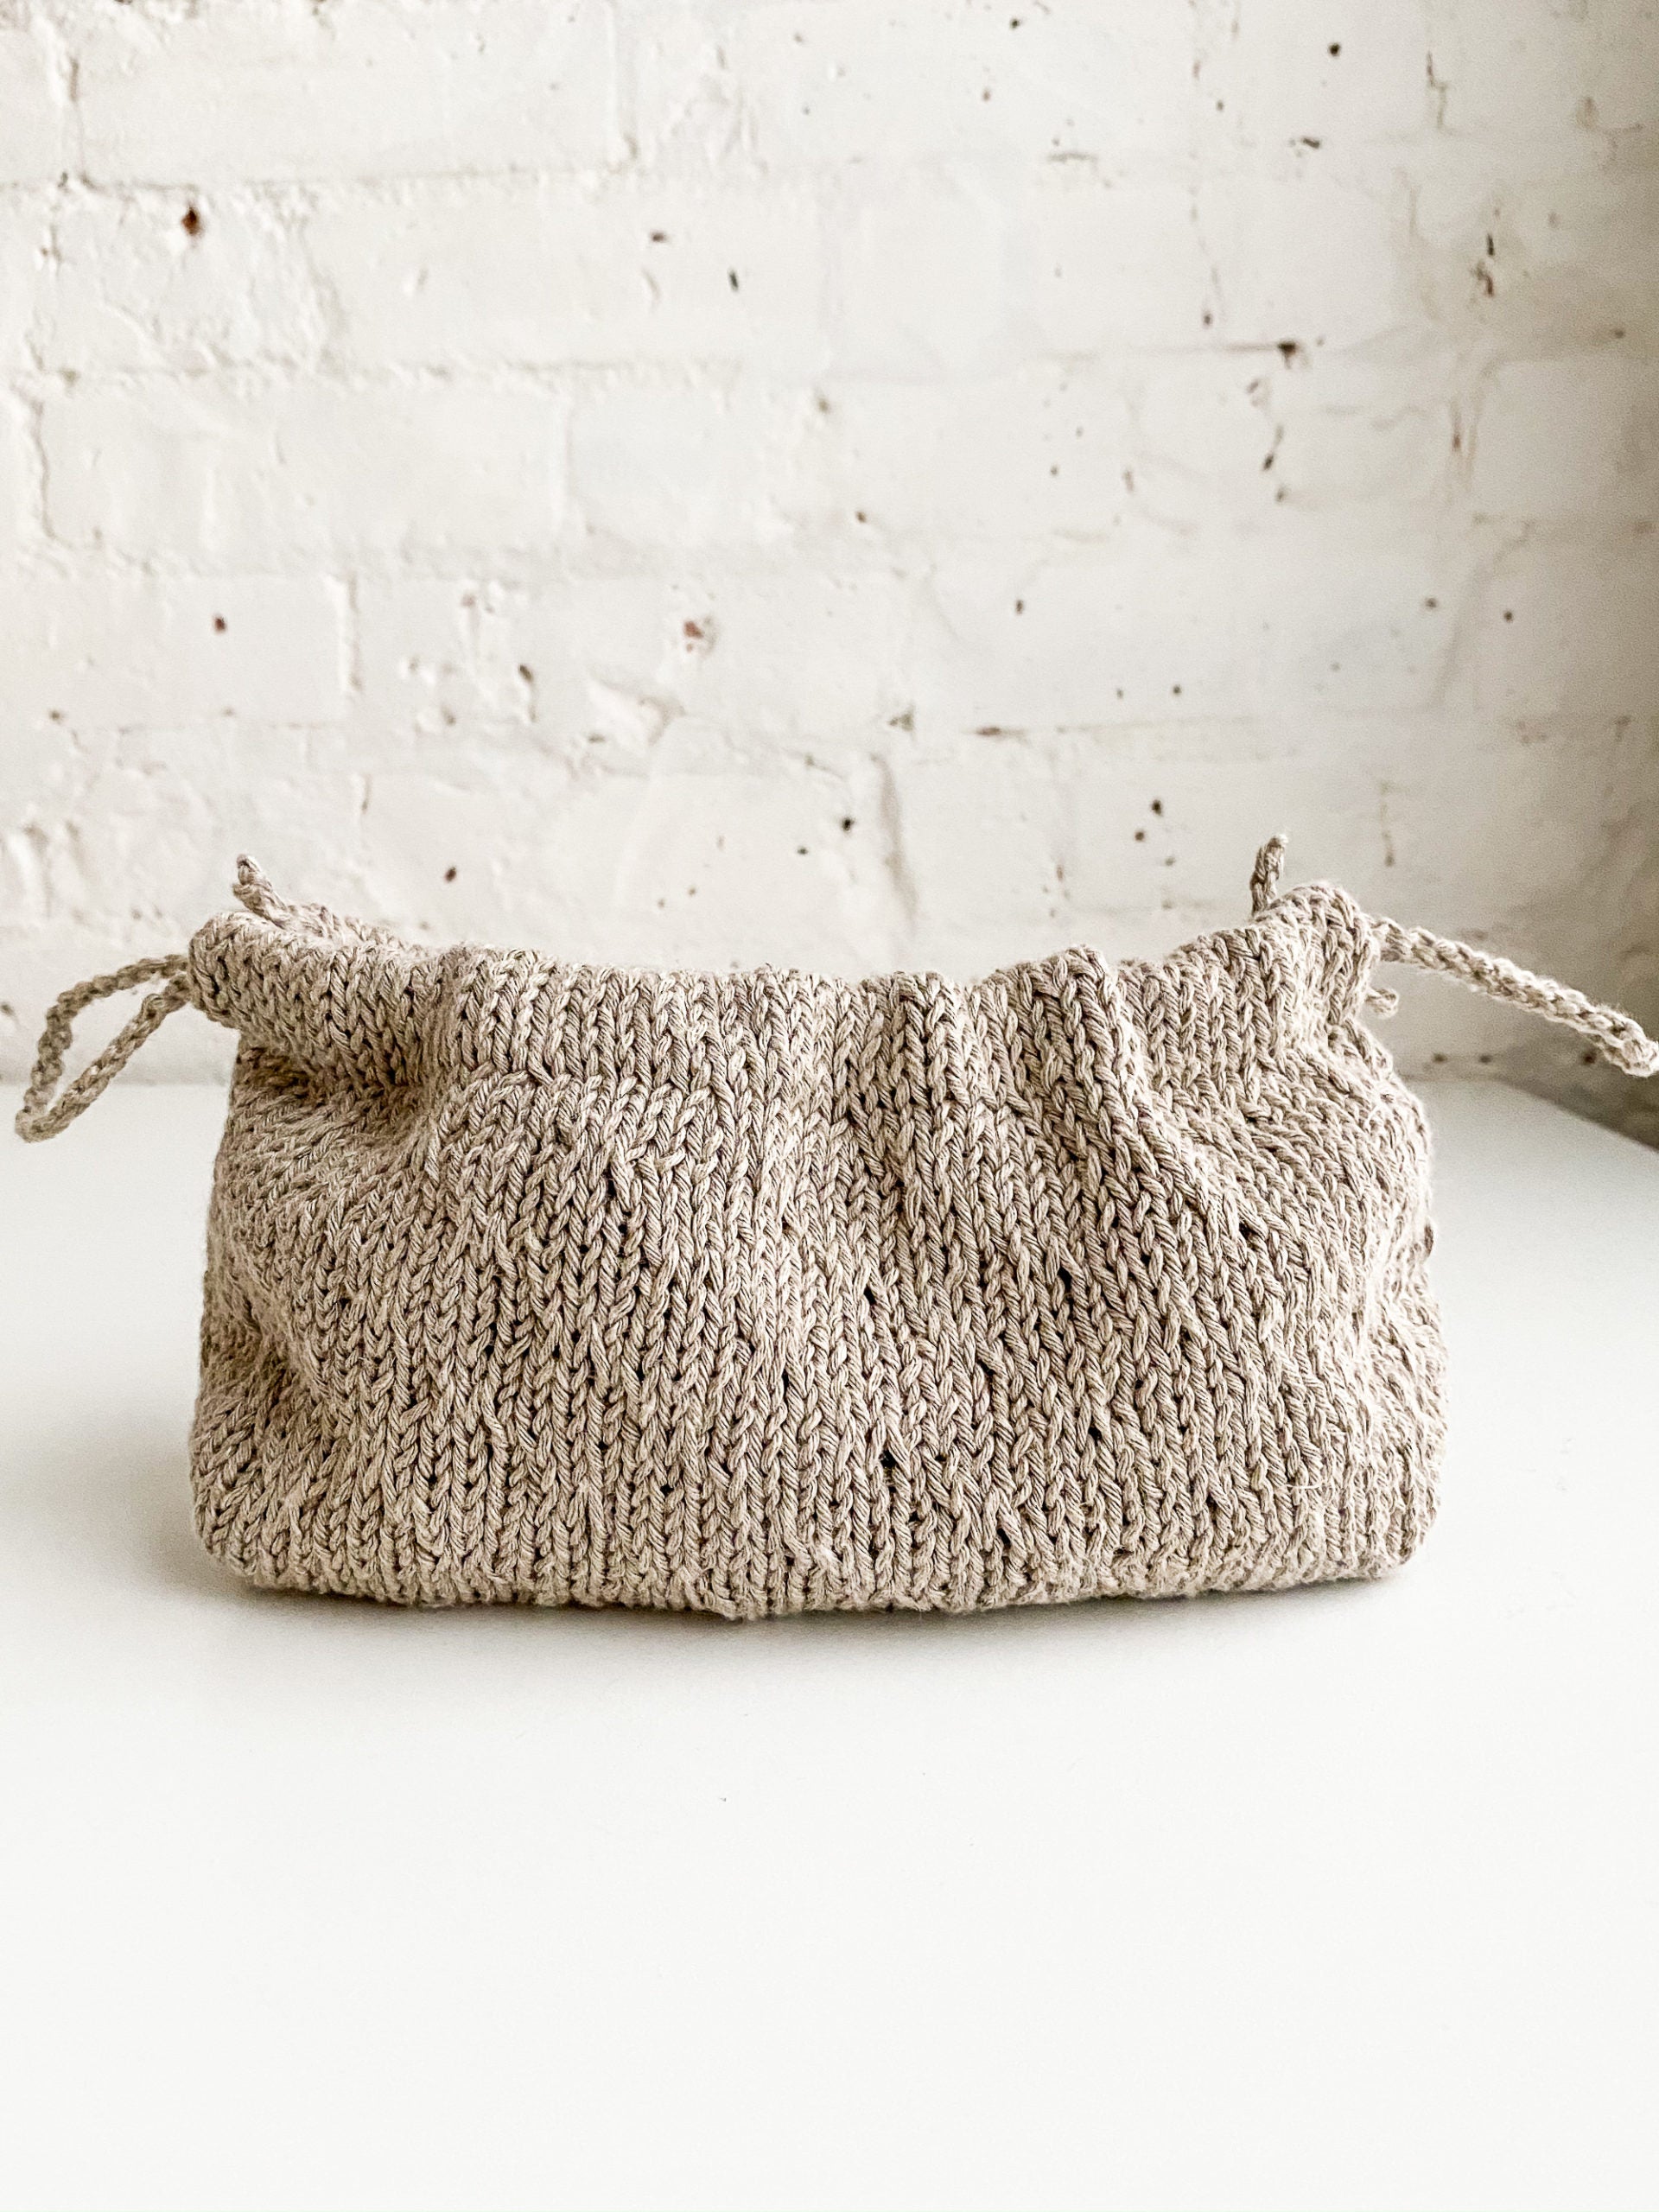 Drawstring Knit Bag Pattern in Trellis Stitch